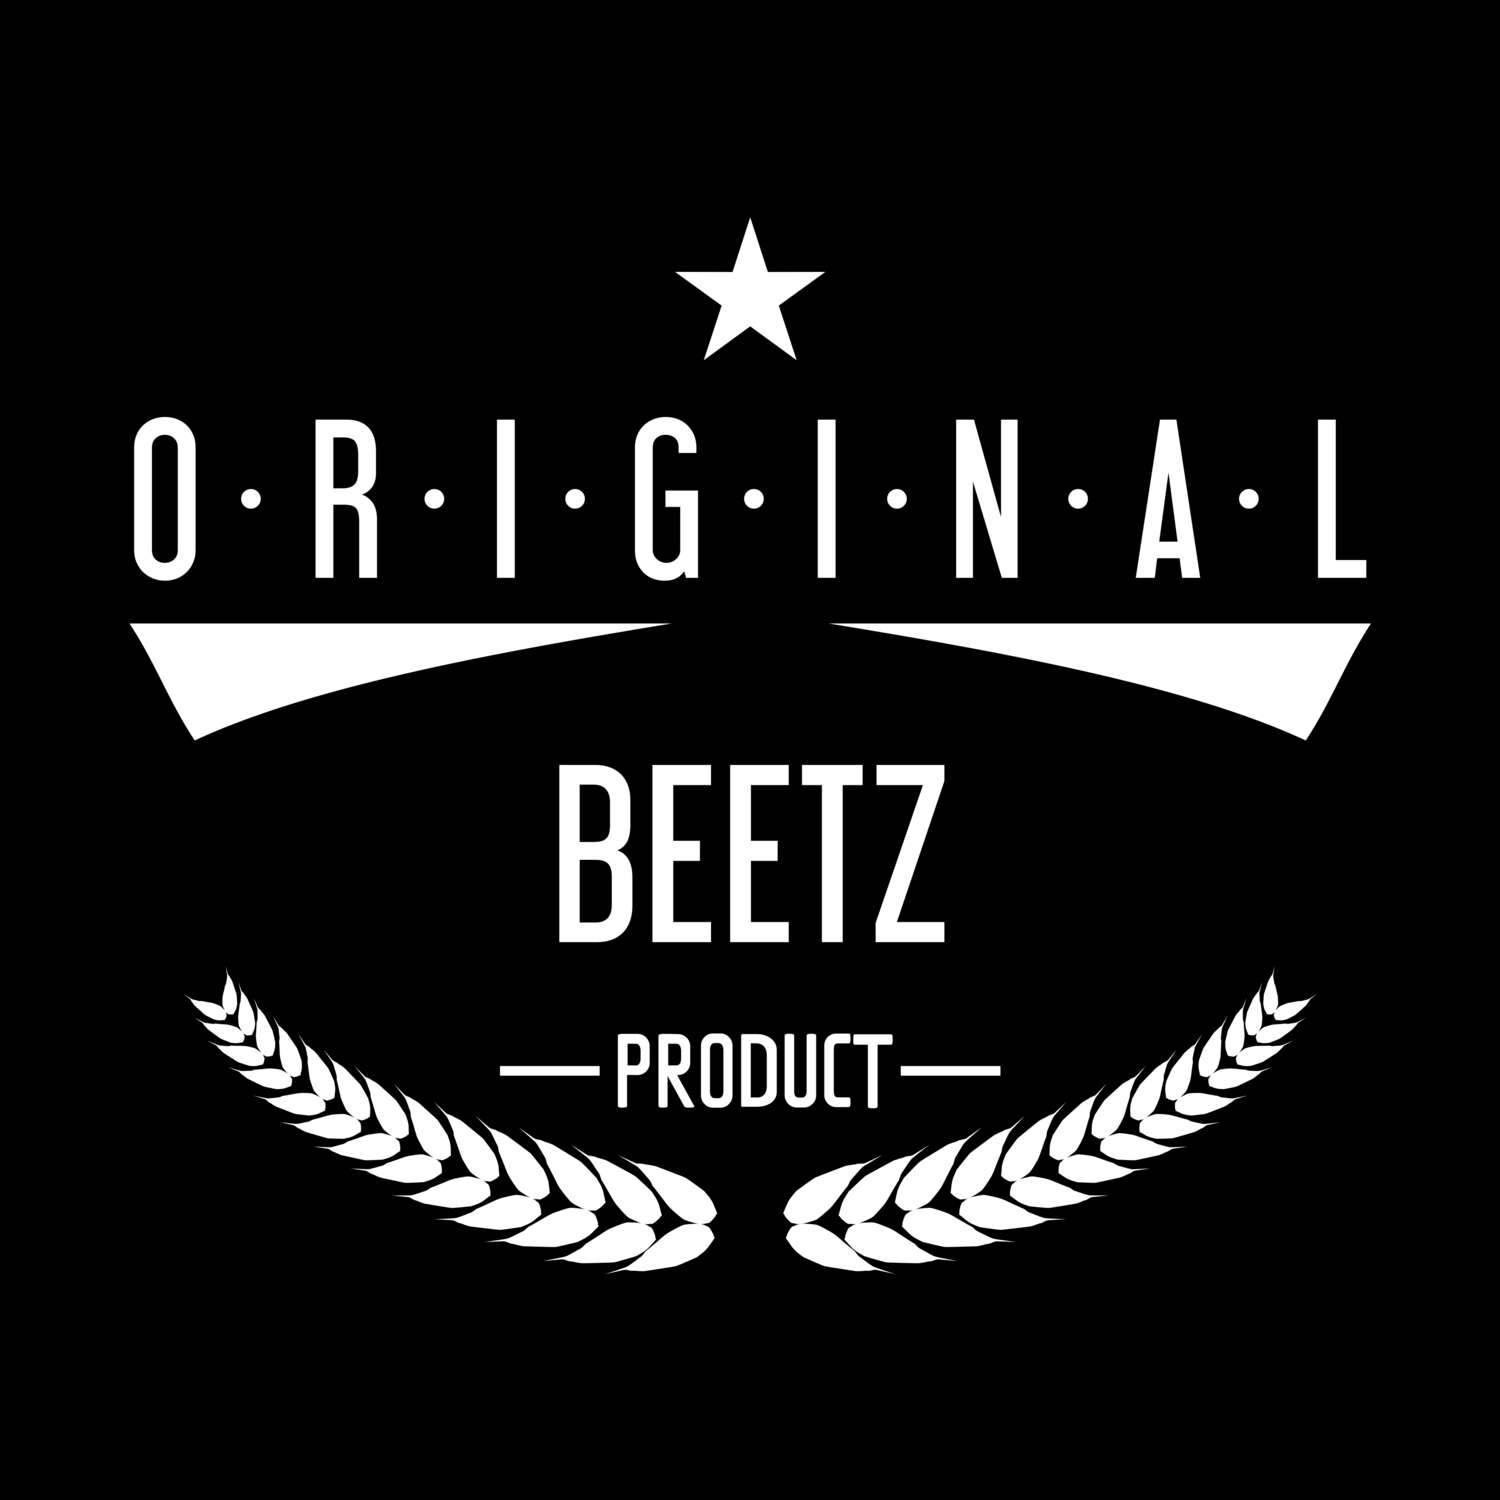 Beetz T-Shirt »Original Product«